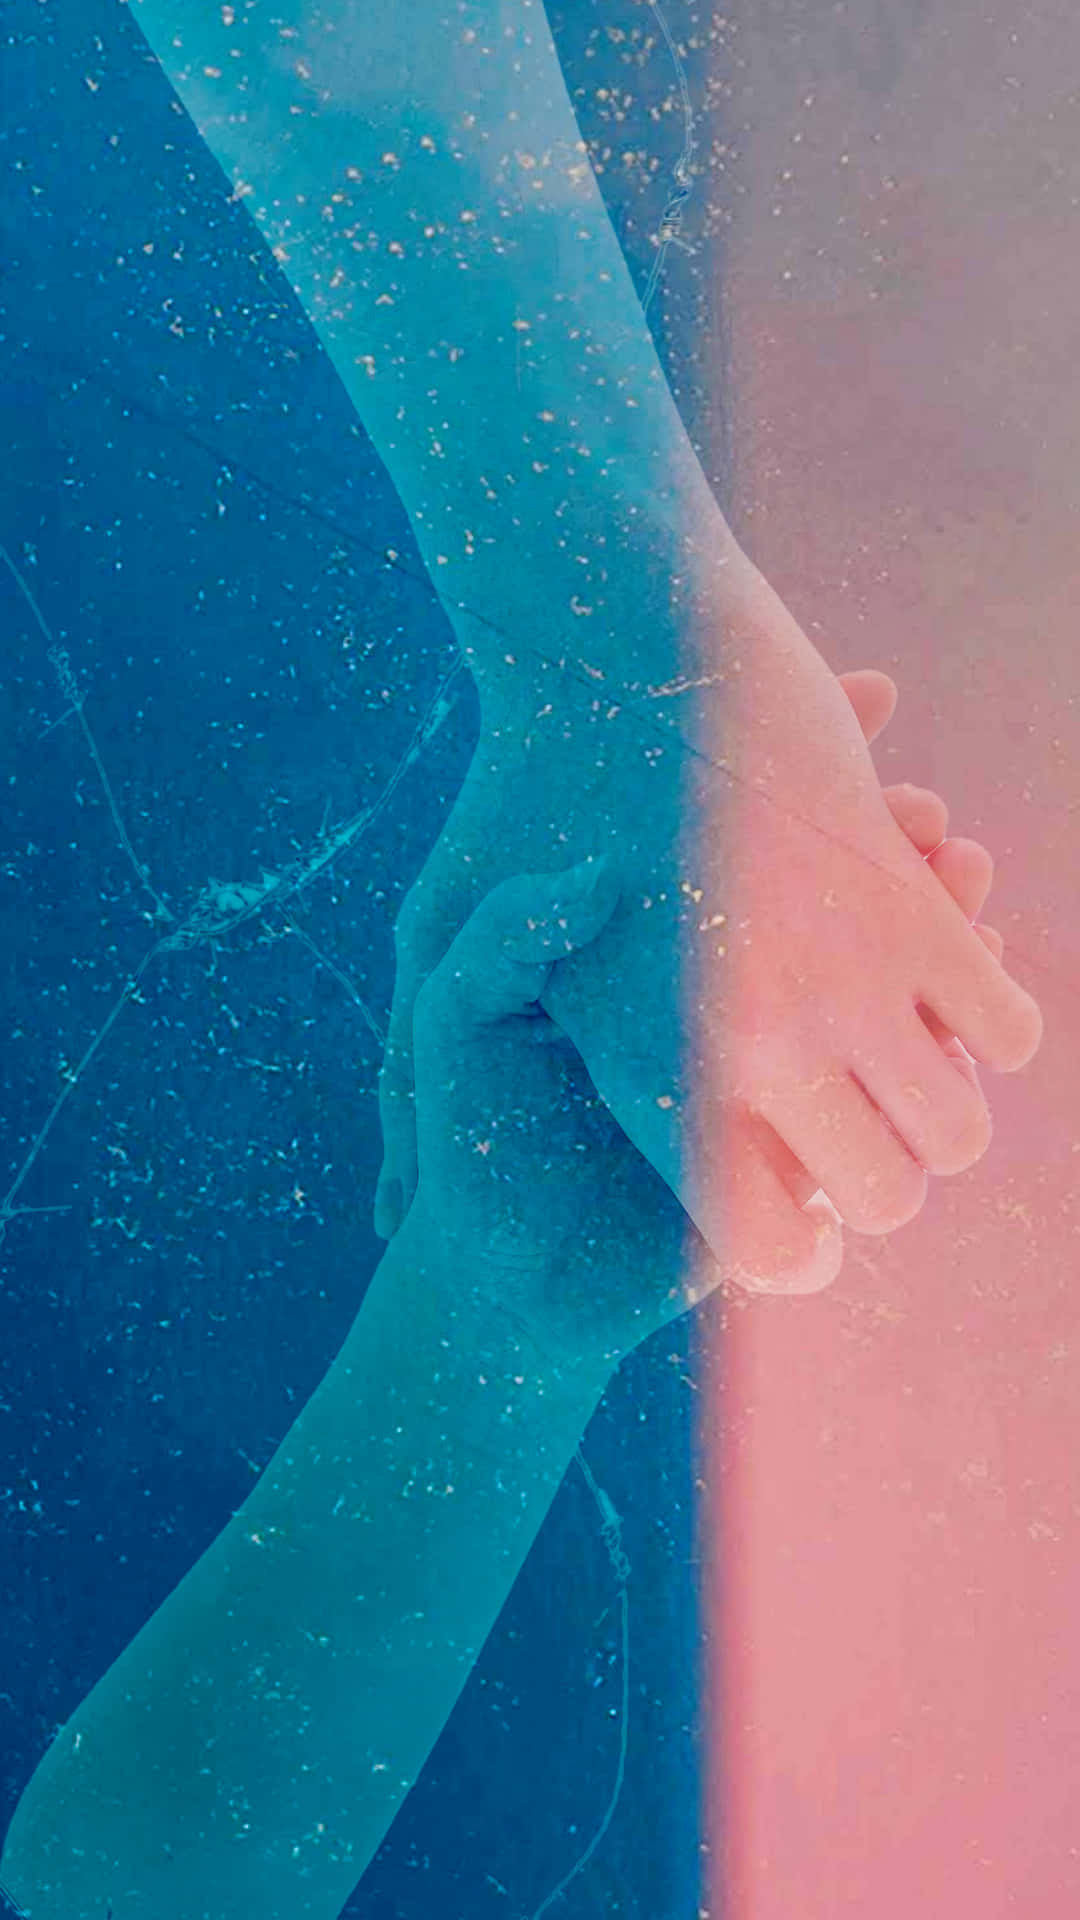 Blue And Pink Textured Handshake